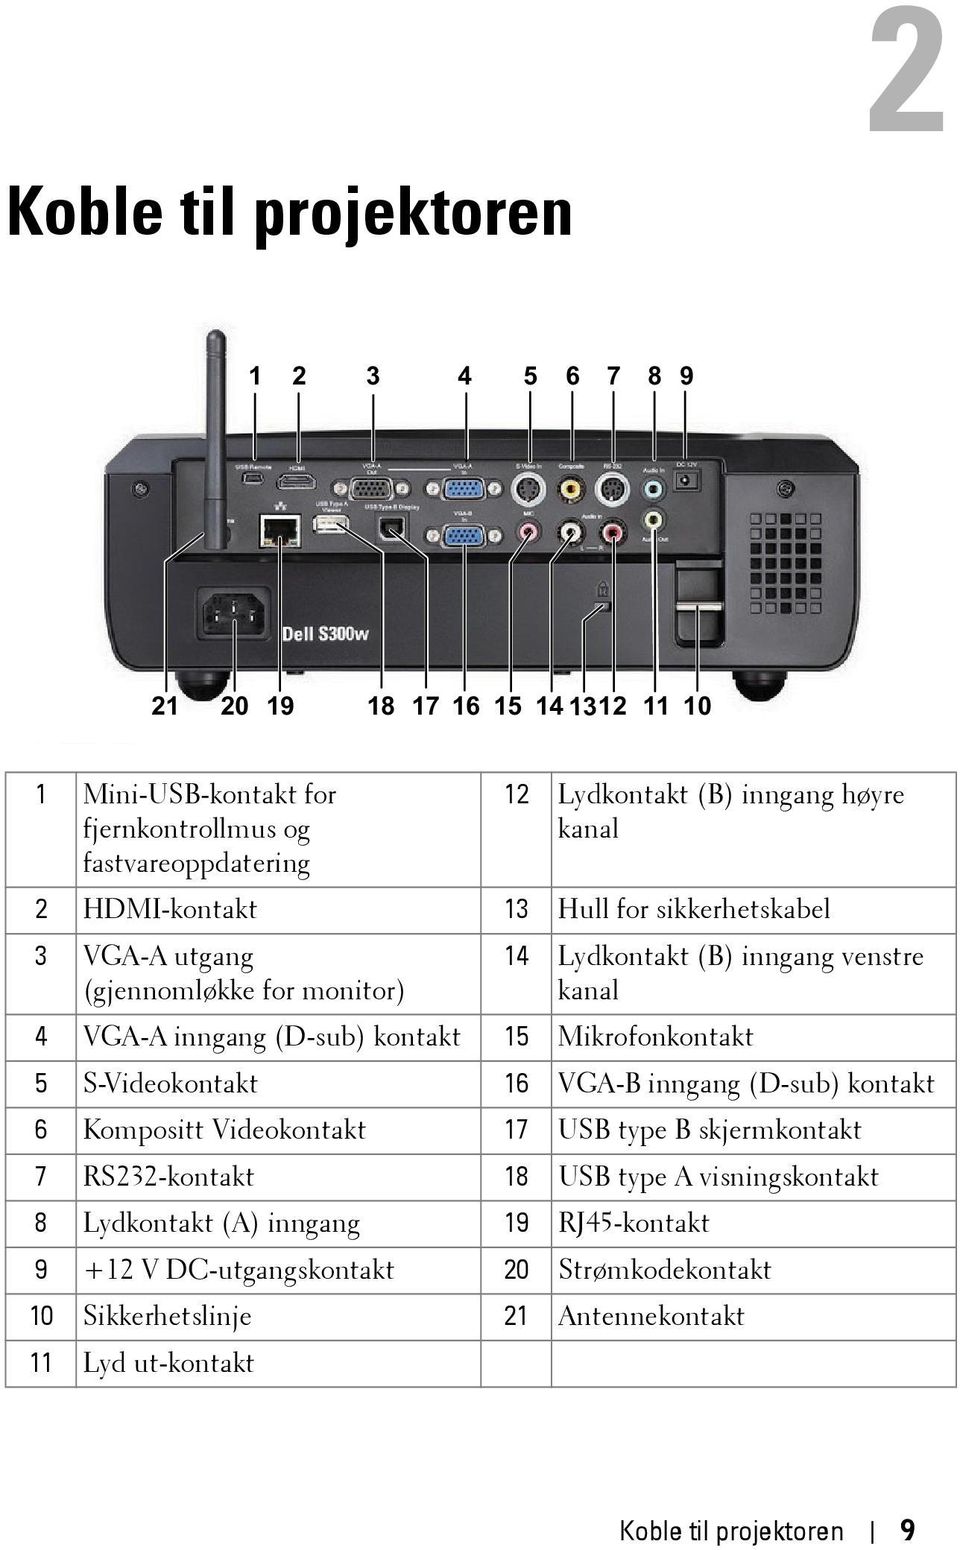 kontakt 15 Mikrofonkontakt 5 S-Videokontakt 16 VGA-B inngang (D-sub) kontakt 6 Kompositt Videokontakt 17 USB type B skjermkontakt 7 RS232-kontakt 18 USB type A